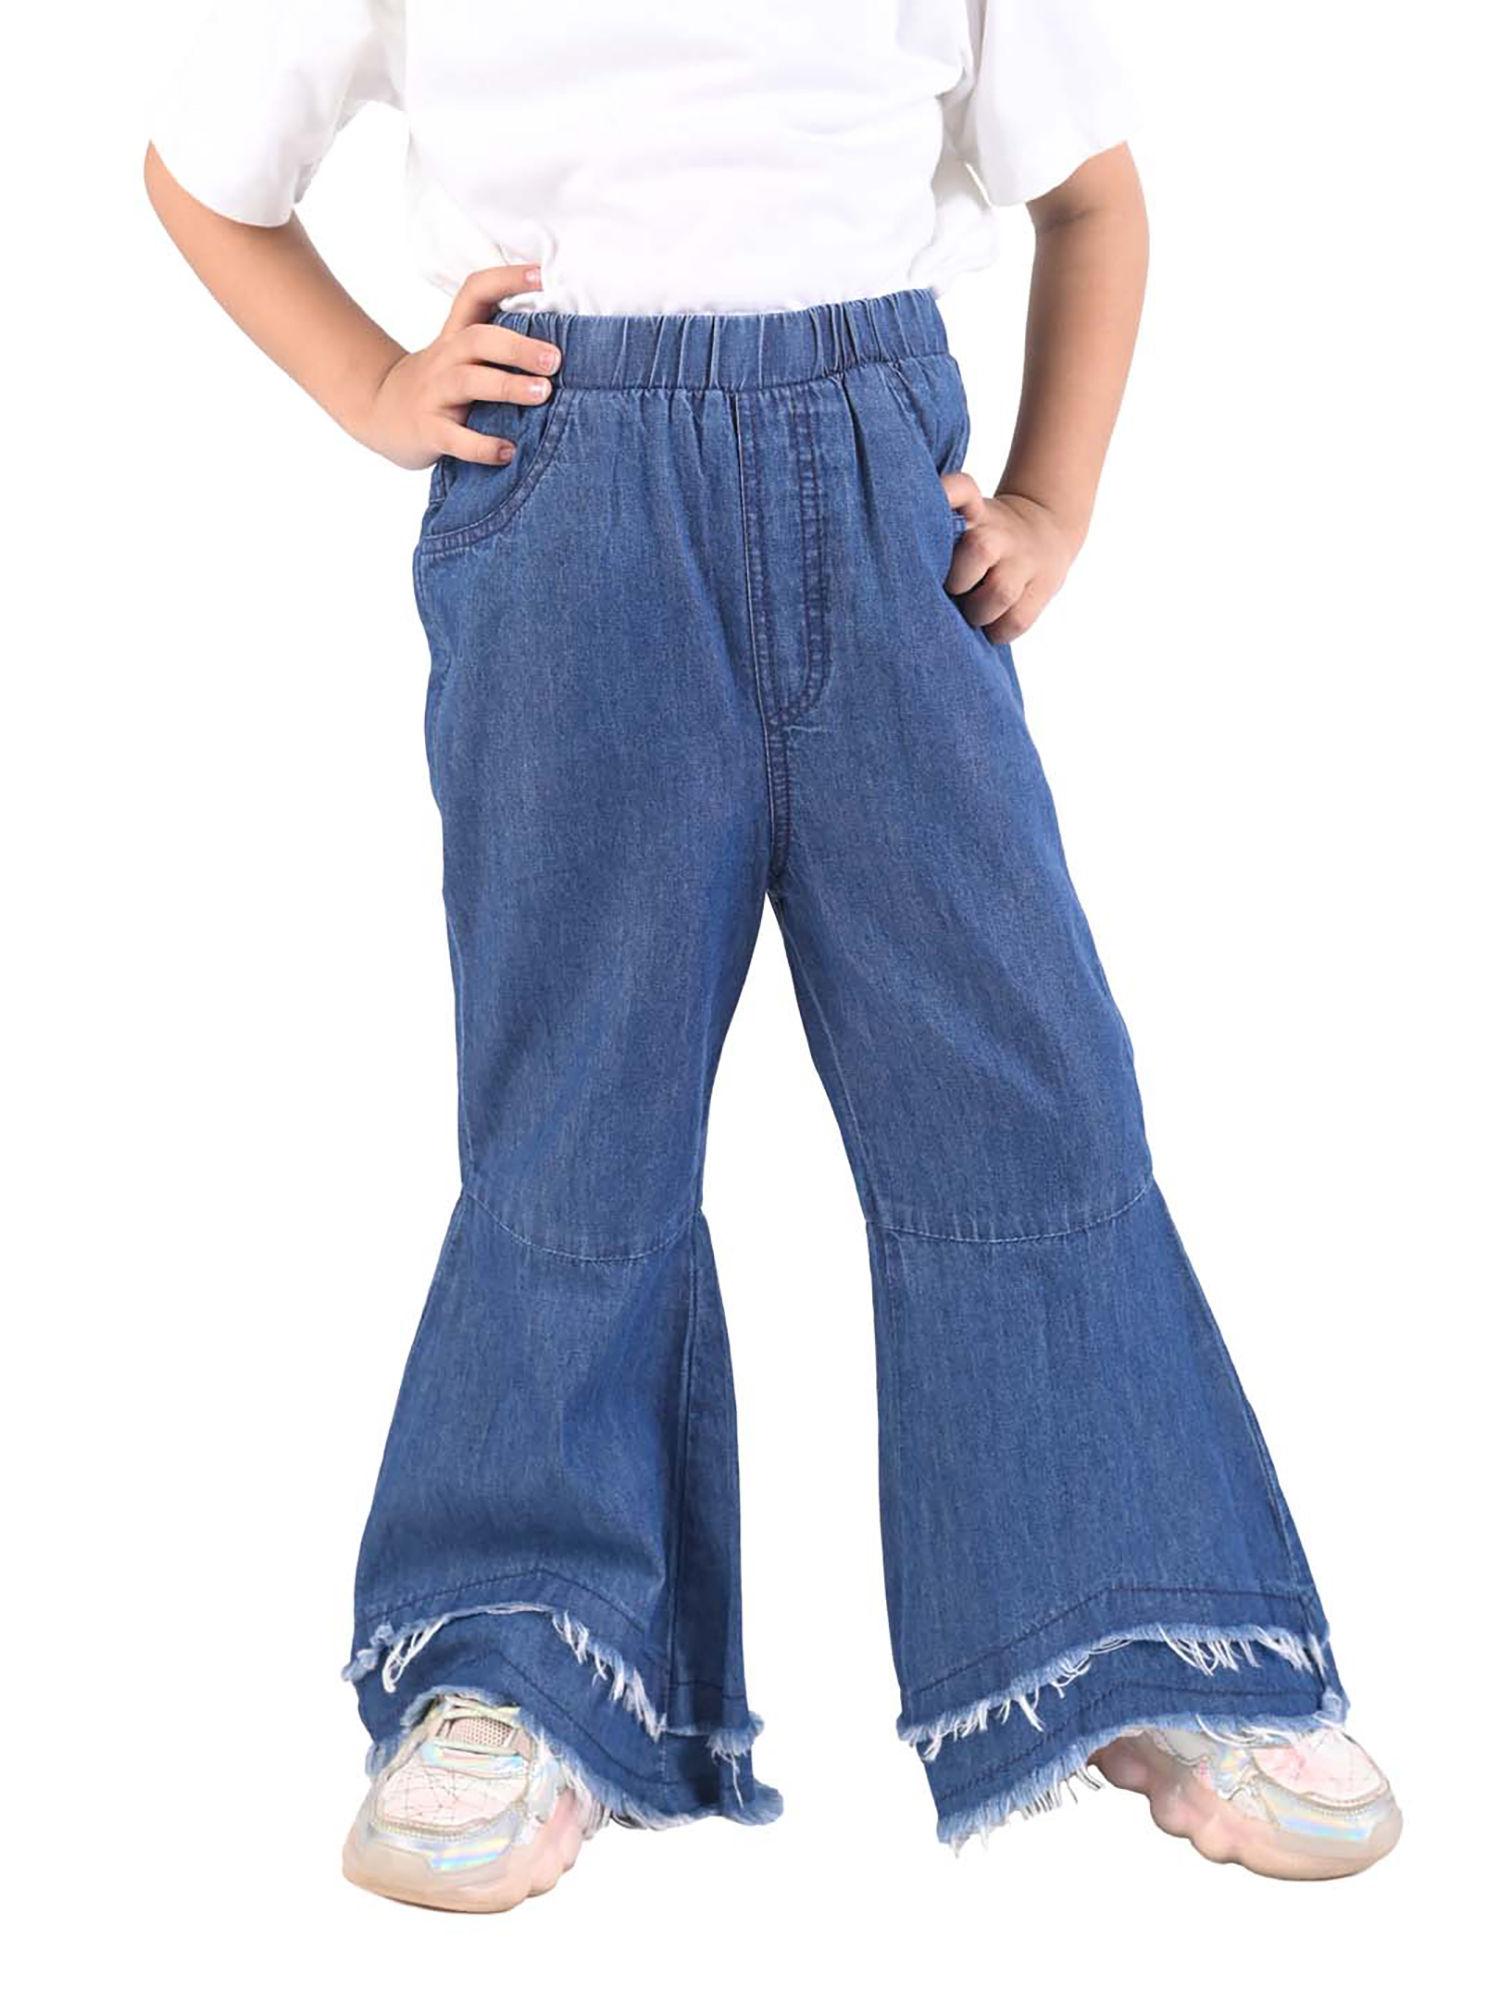 girls blue denim jeans with stylish raw edge